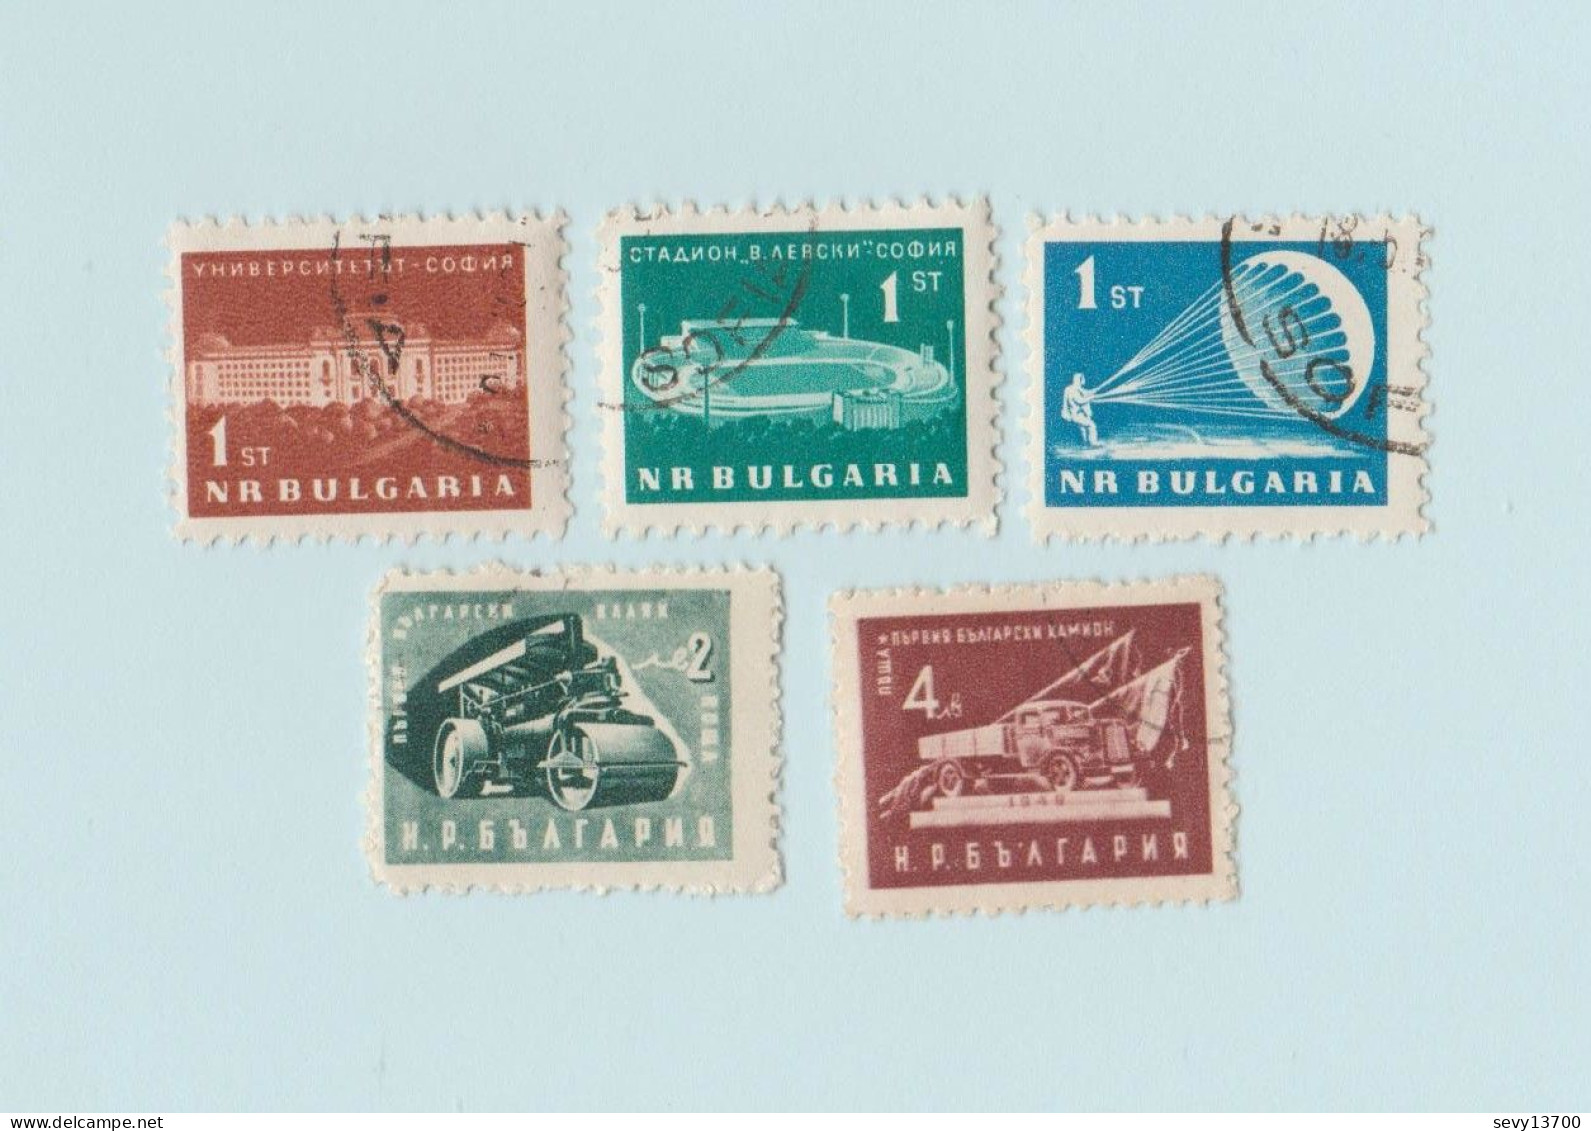 Bulgarie - lot de 117 timbres